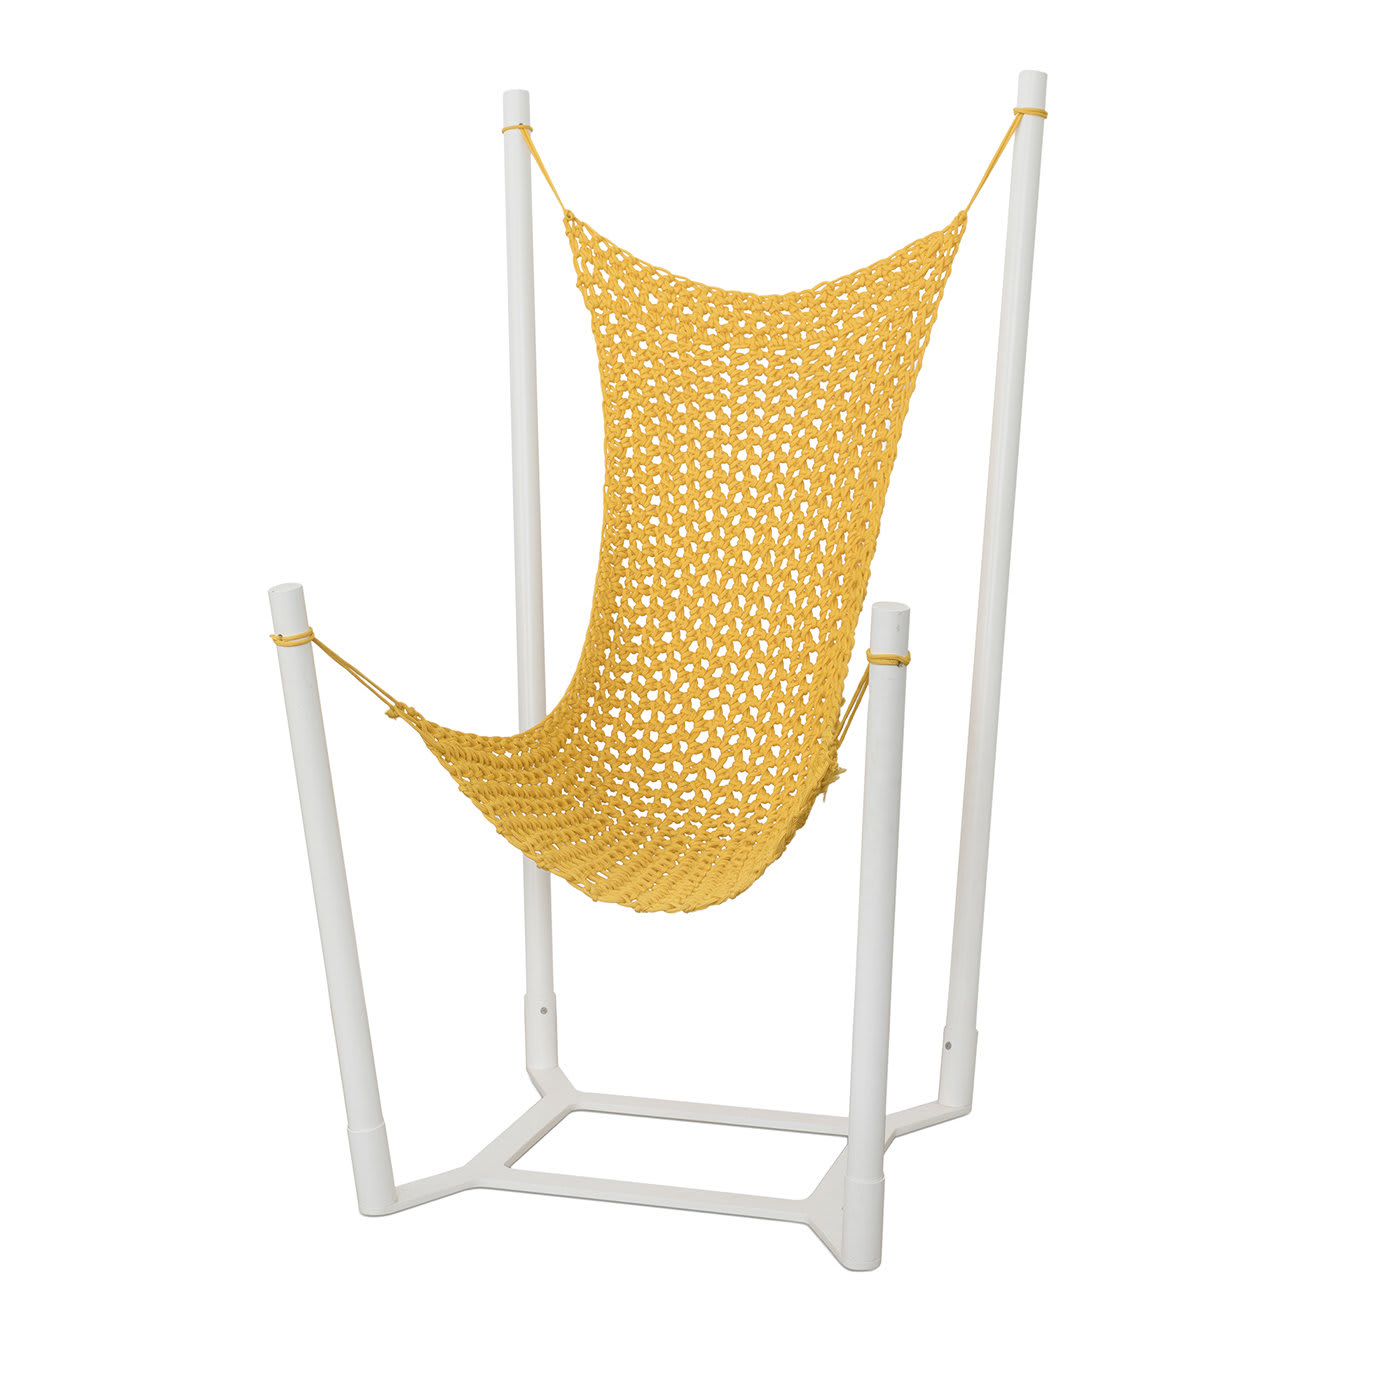 Allegra Yellow Hammock Chair - Impagliando